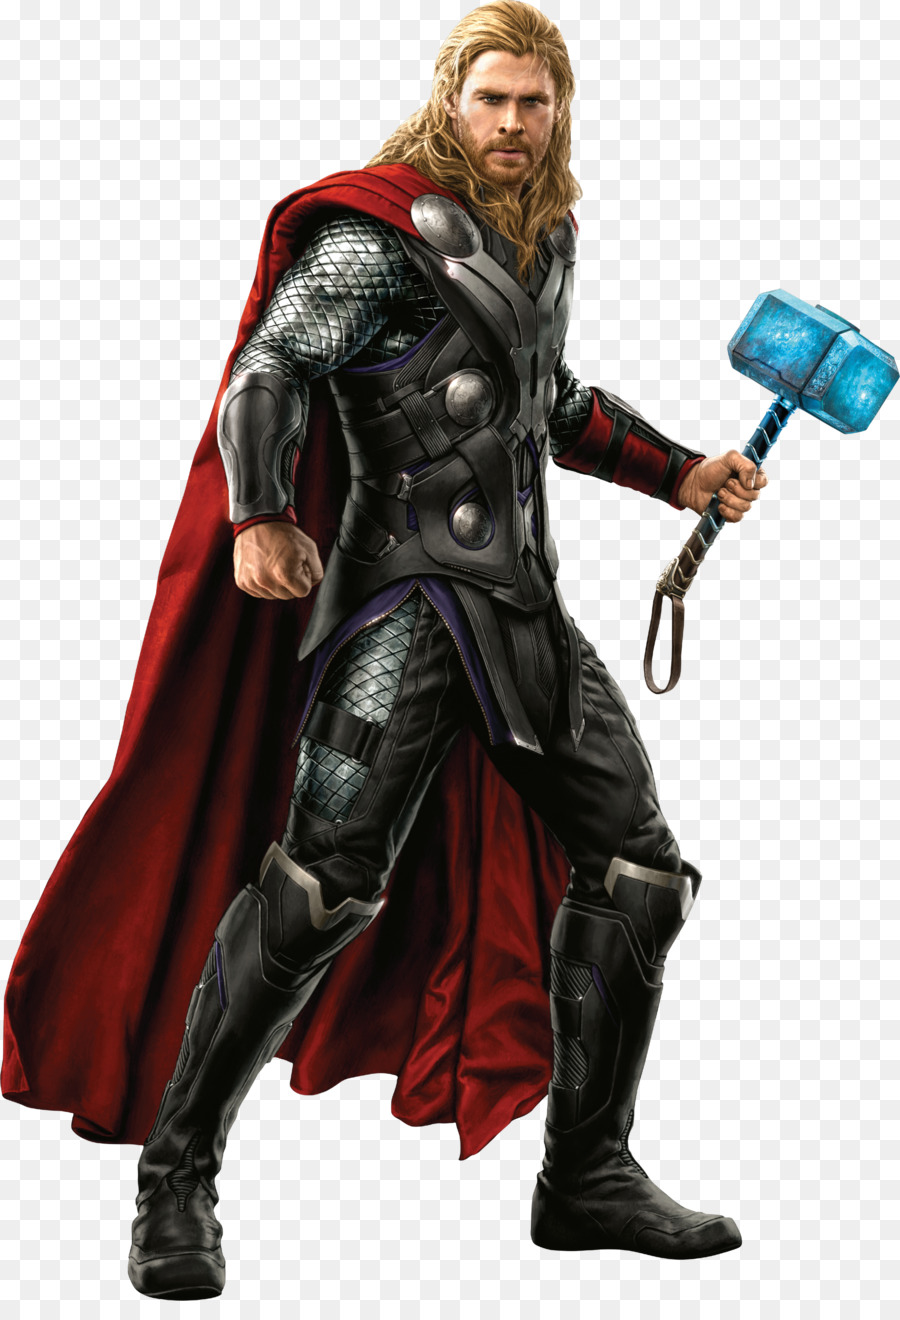 Thor Clip art - Thor Cliparts